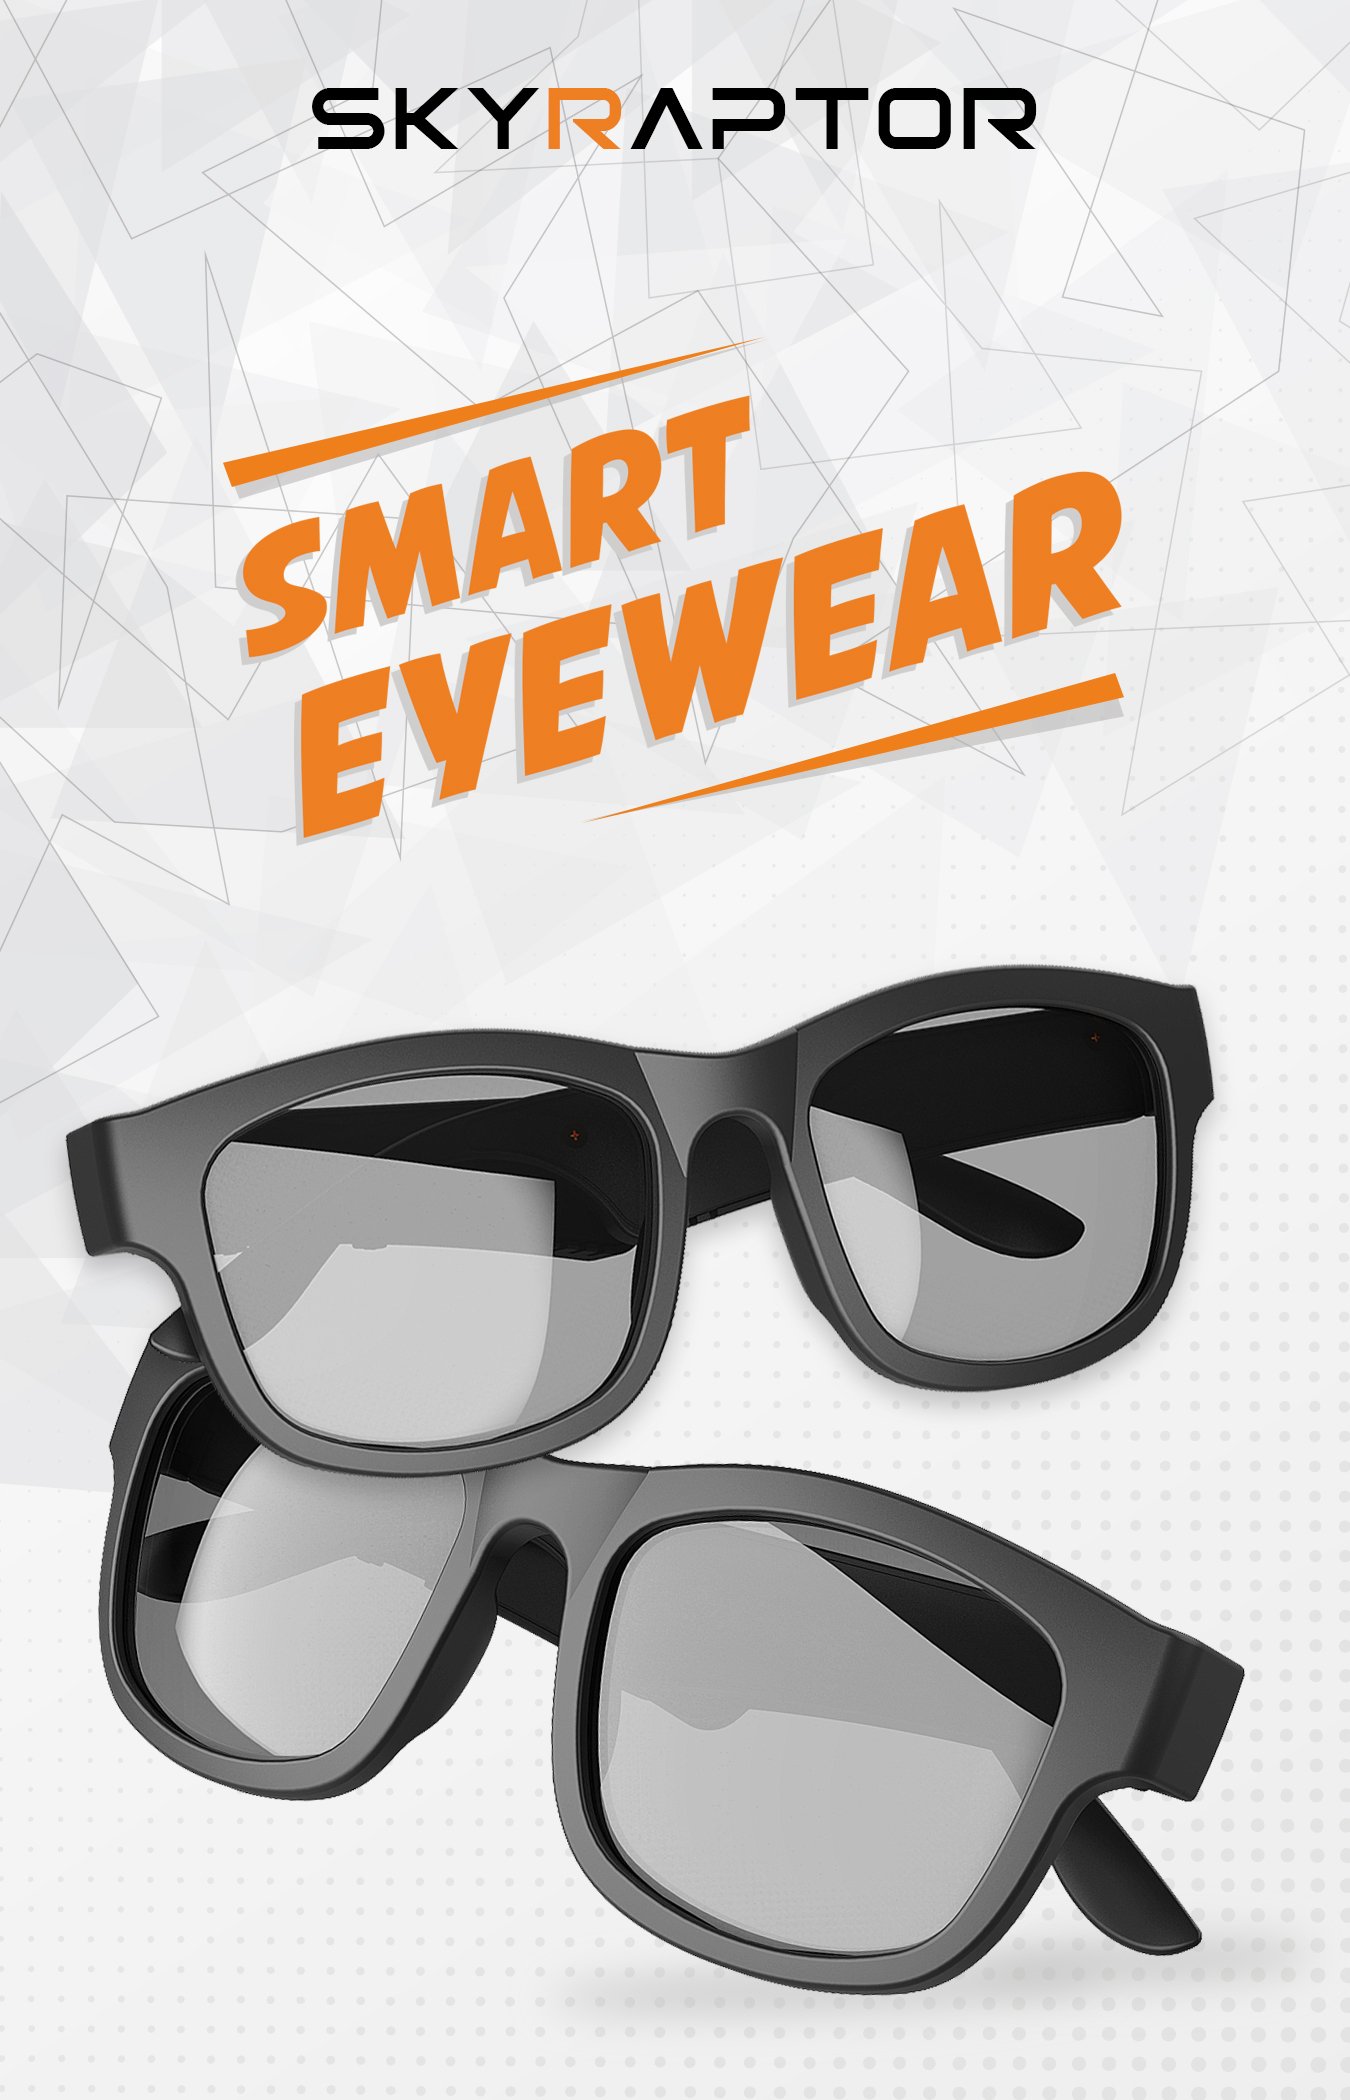 Skyraptor Series Smart Eyewear